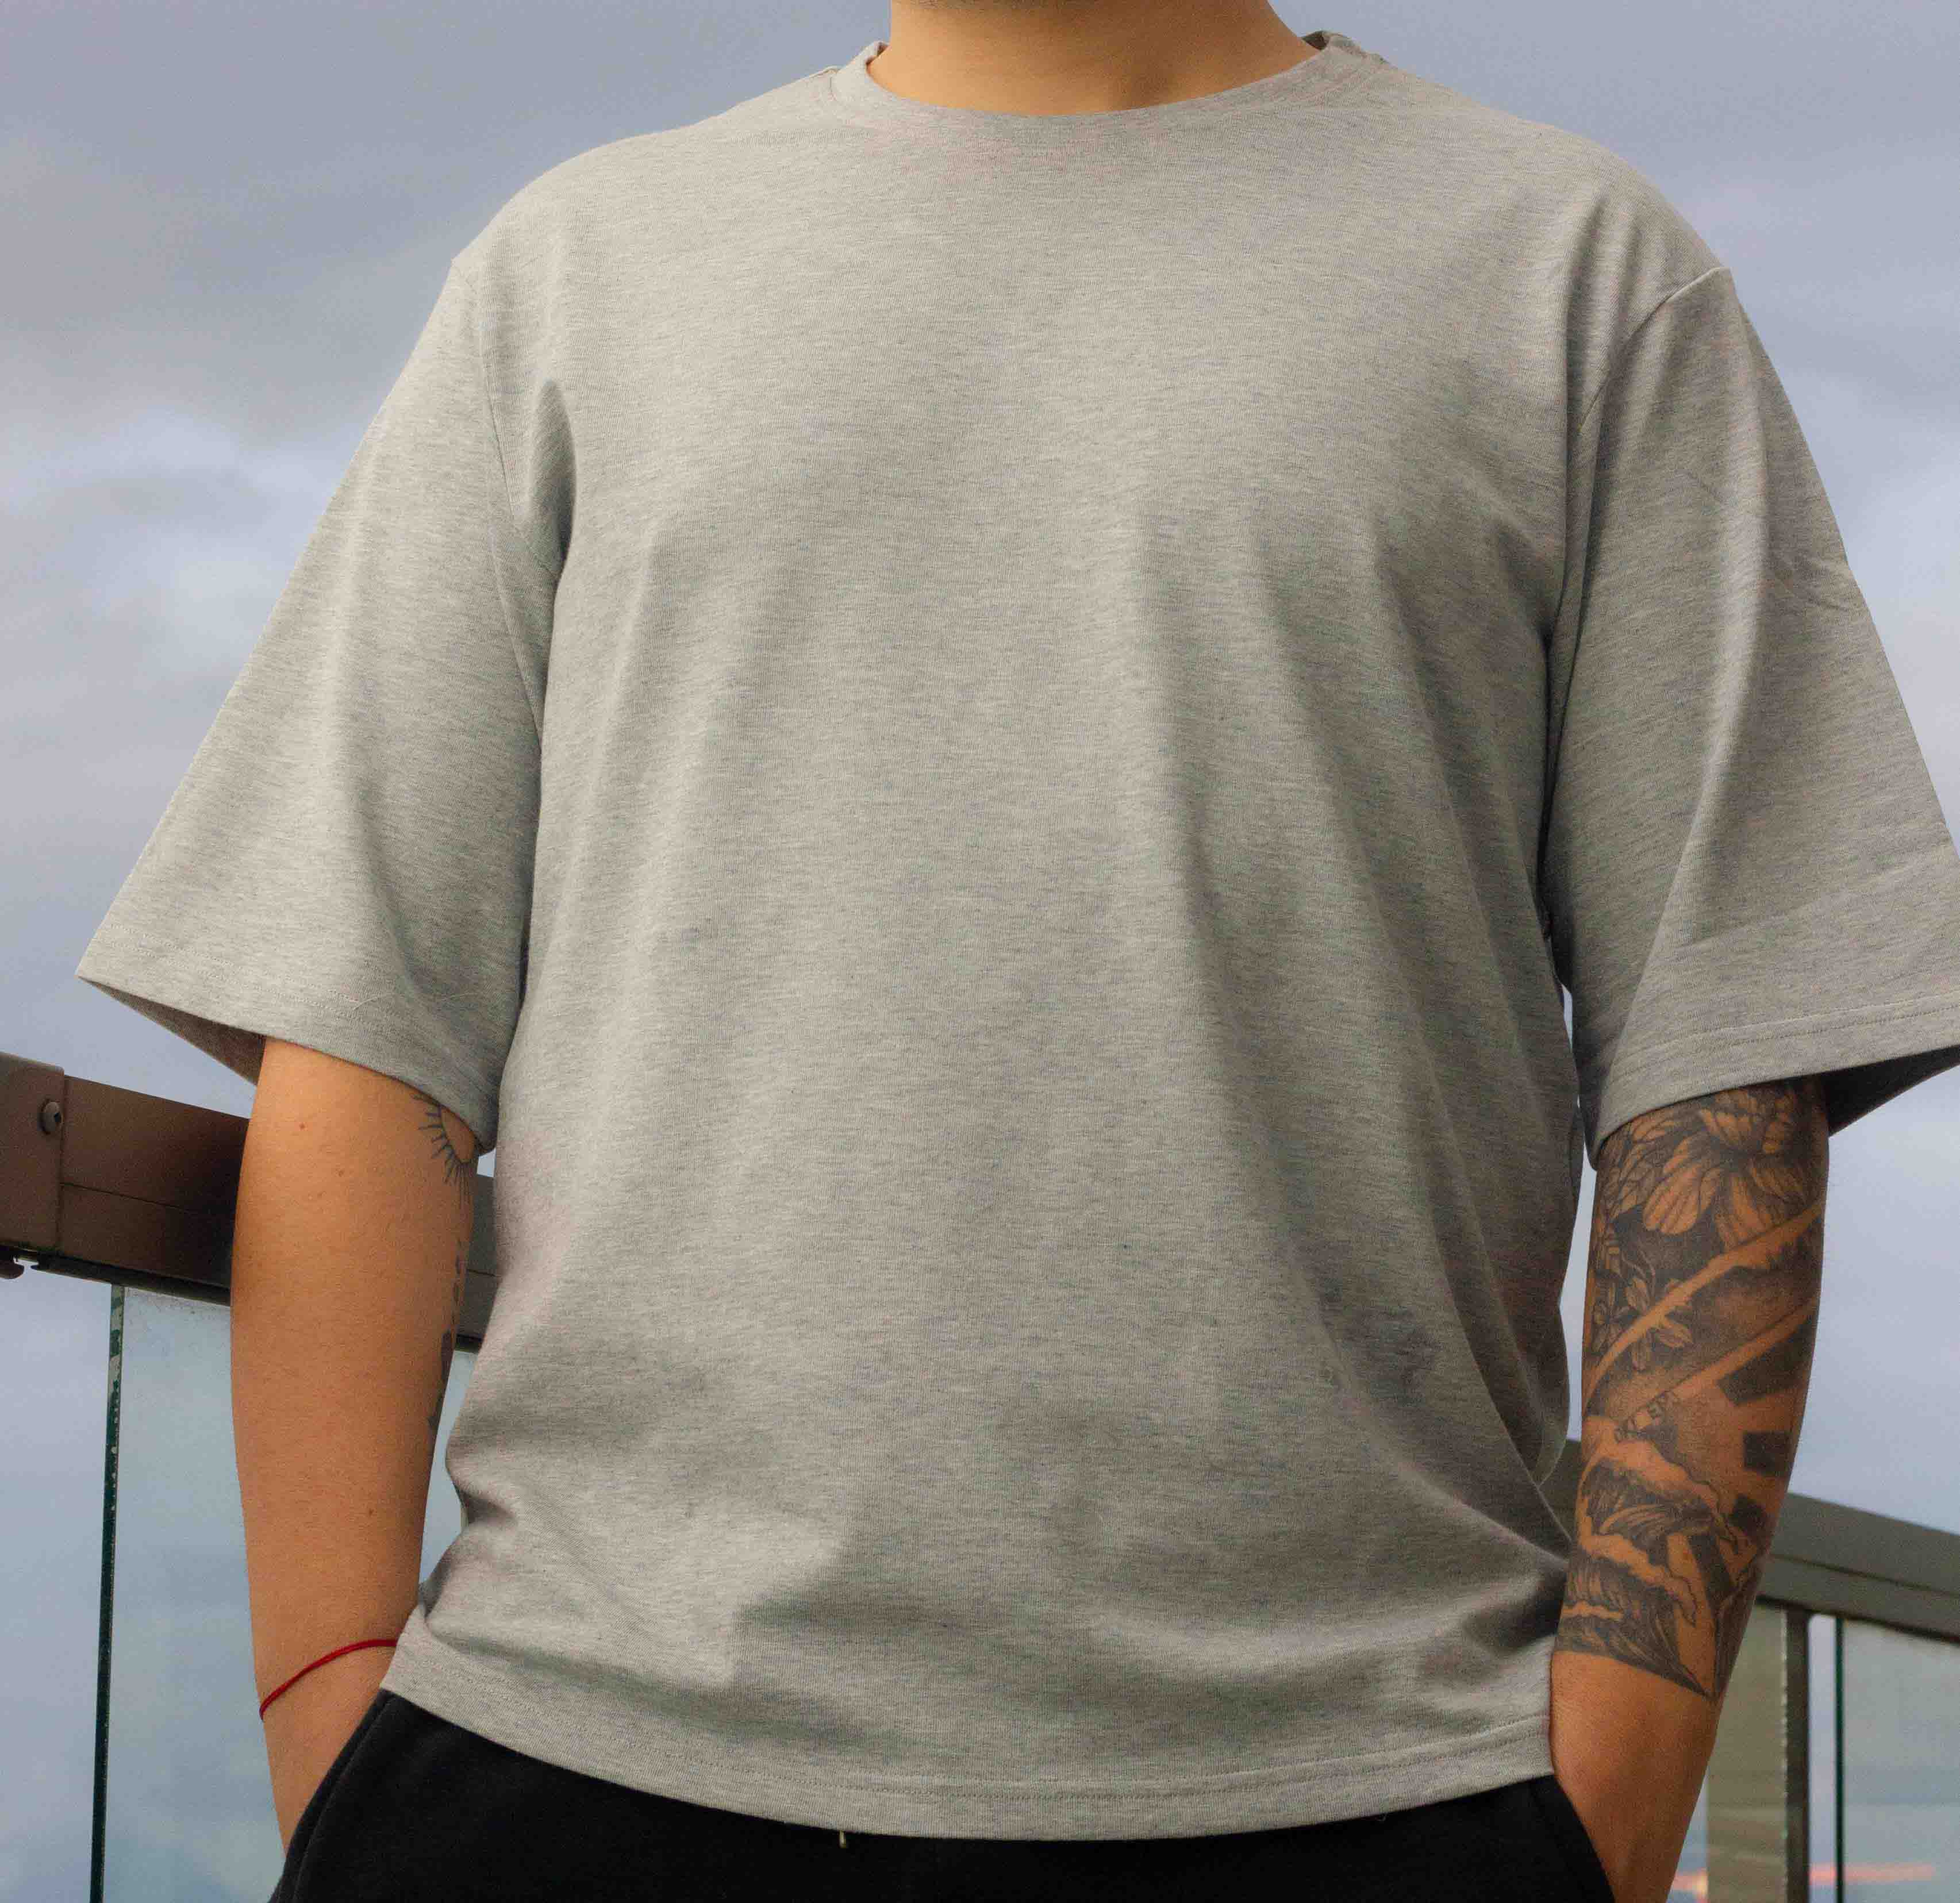 EMF Shielding Unisex T-shirt Made with Silver Fiber Fabric - SleepGift